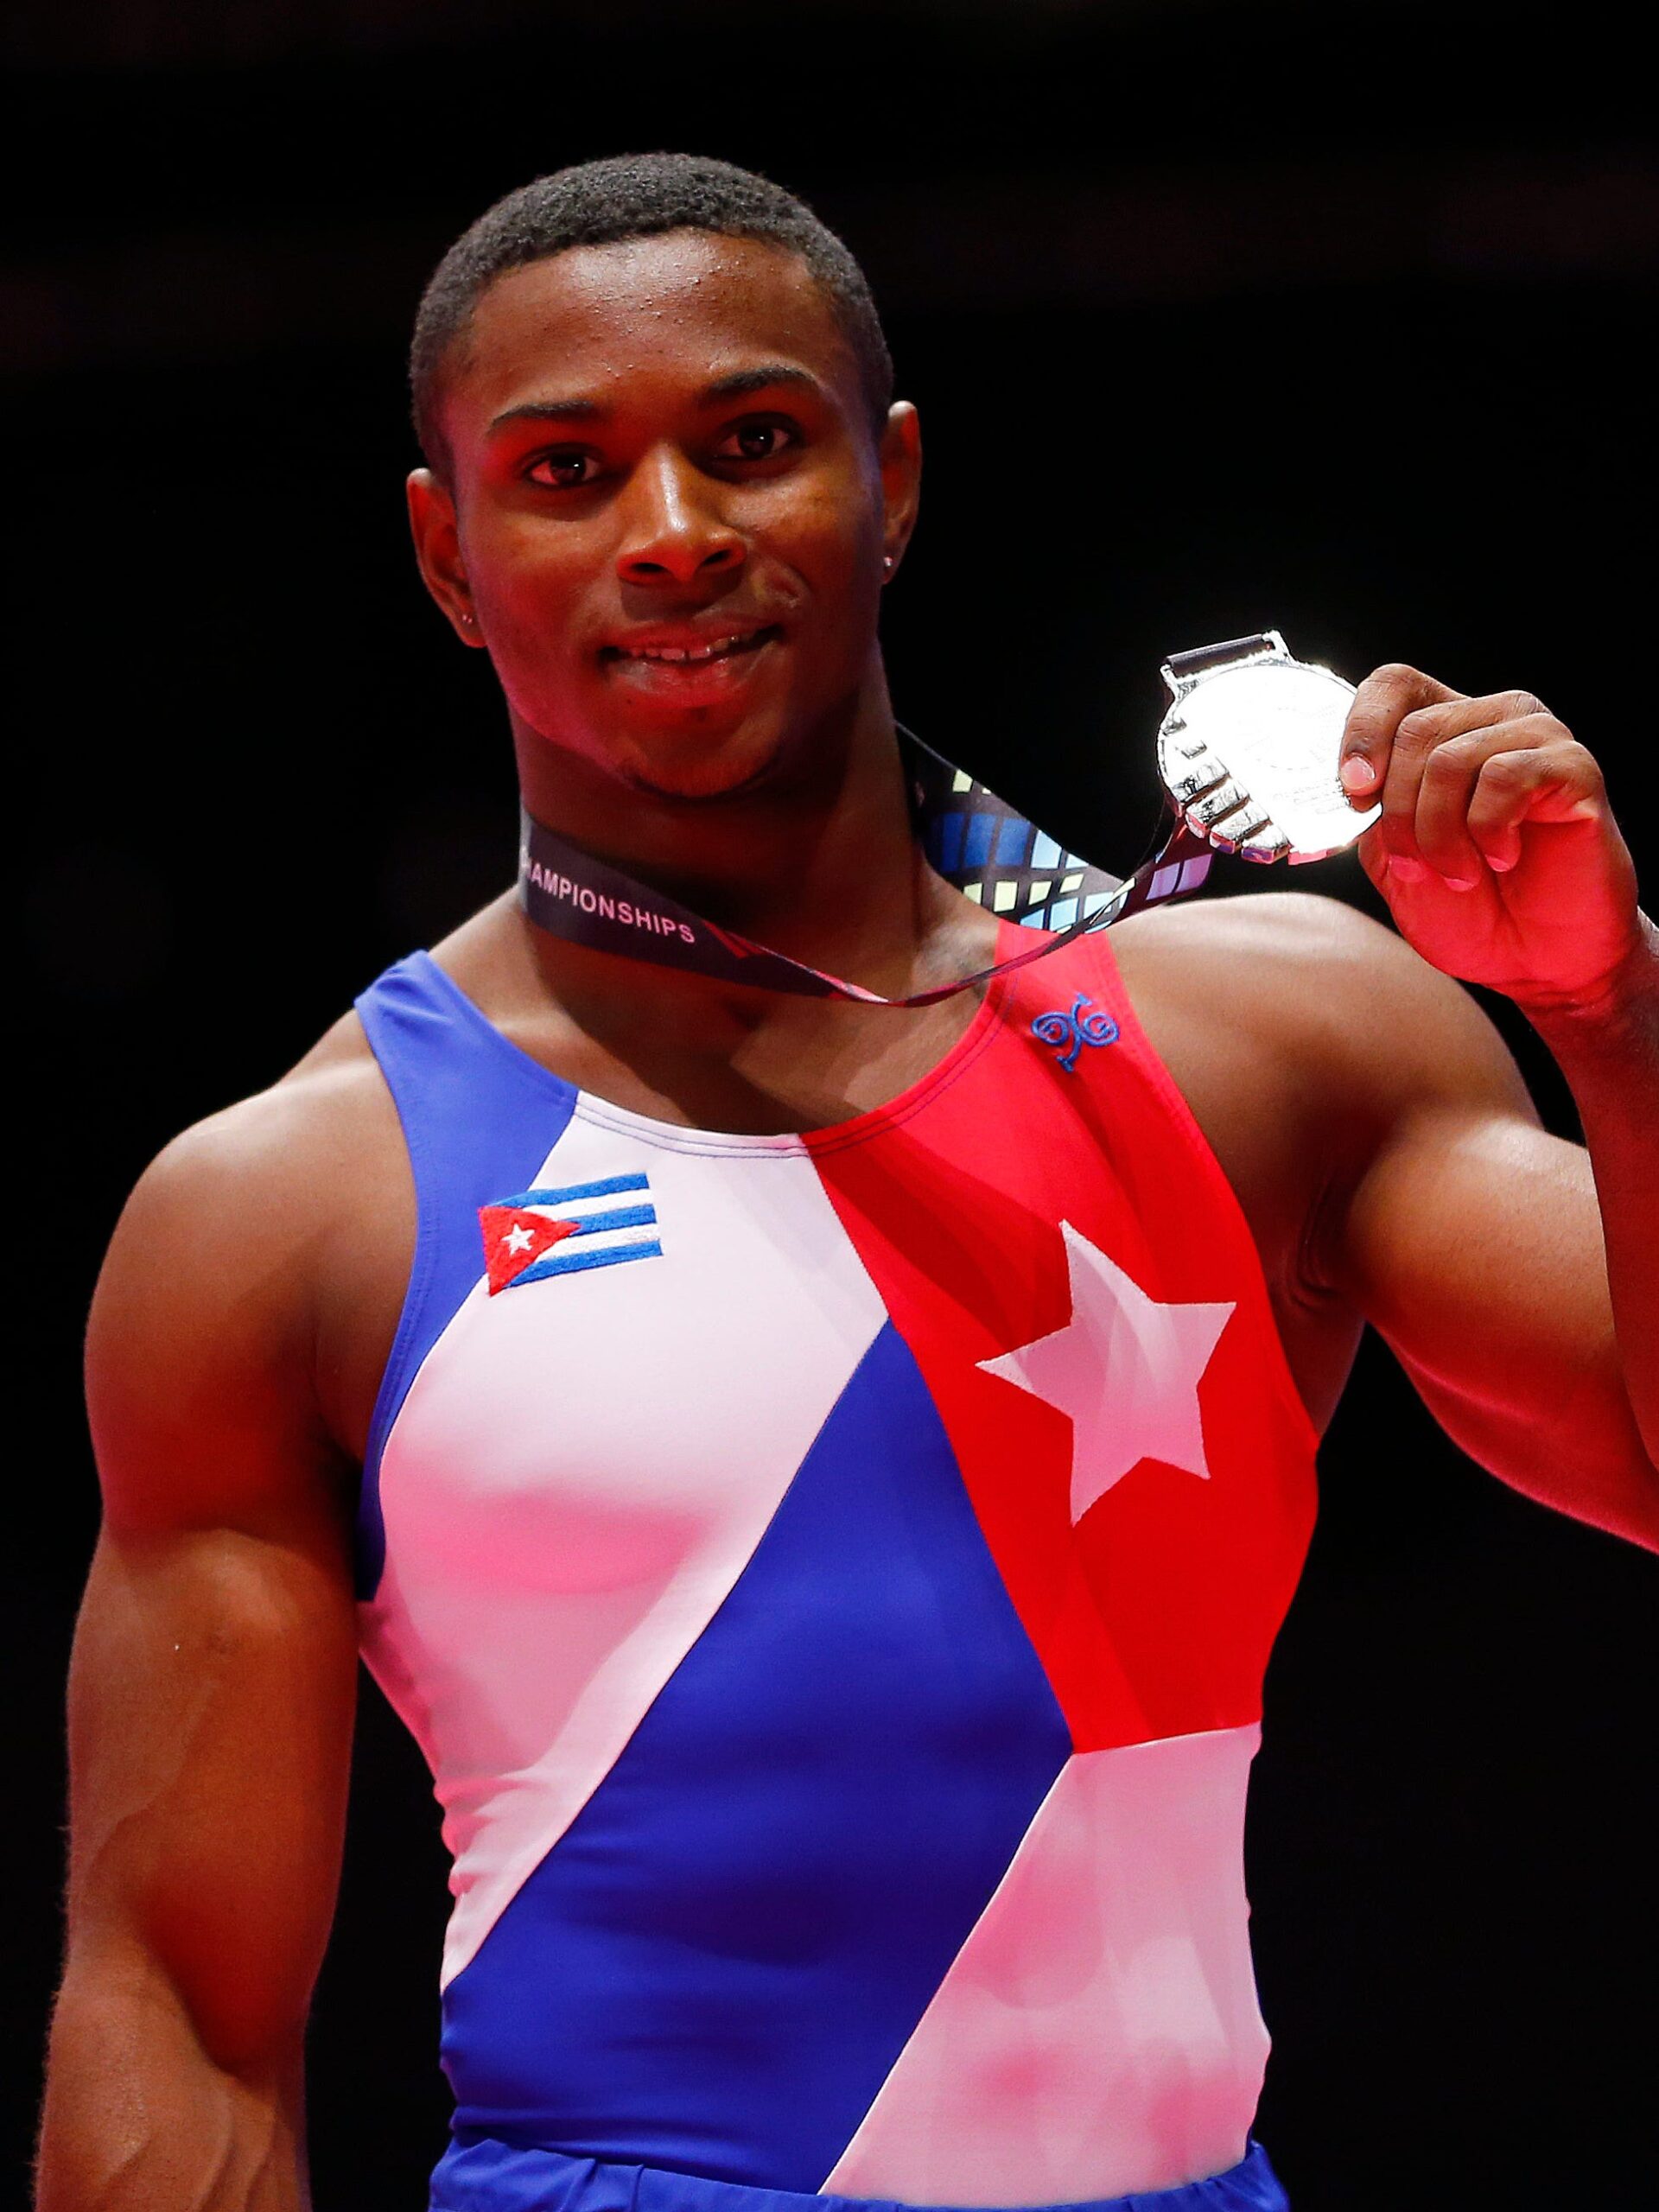 Manrique Larduet Is A Cuban Former Artistic Gymnast